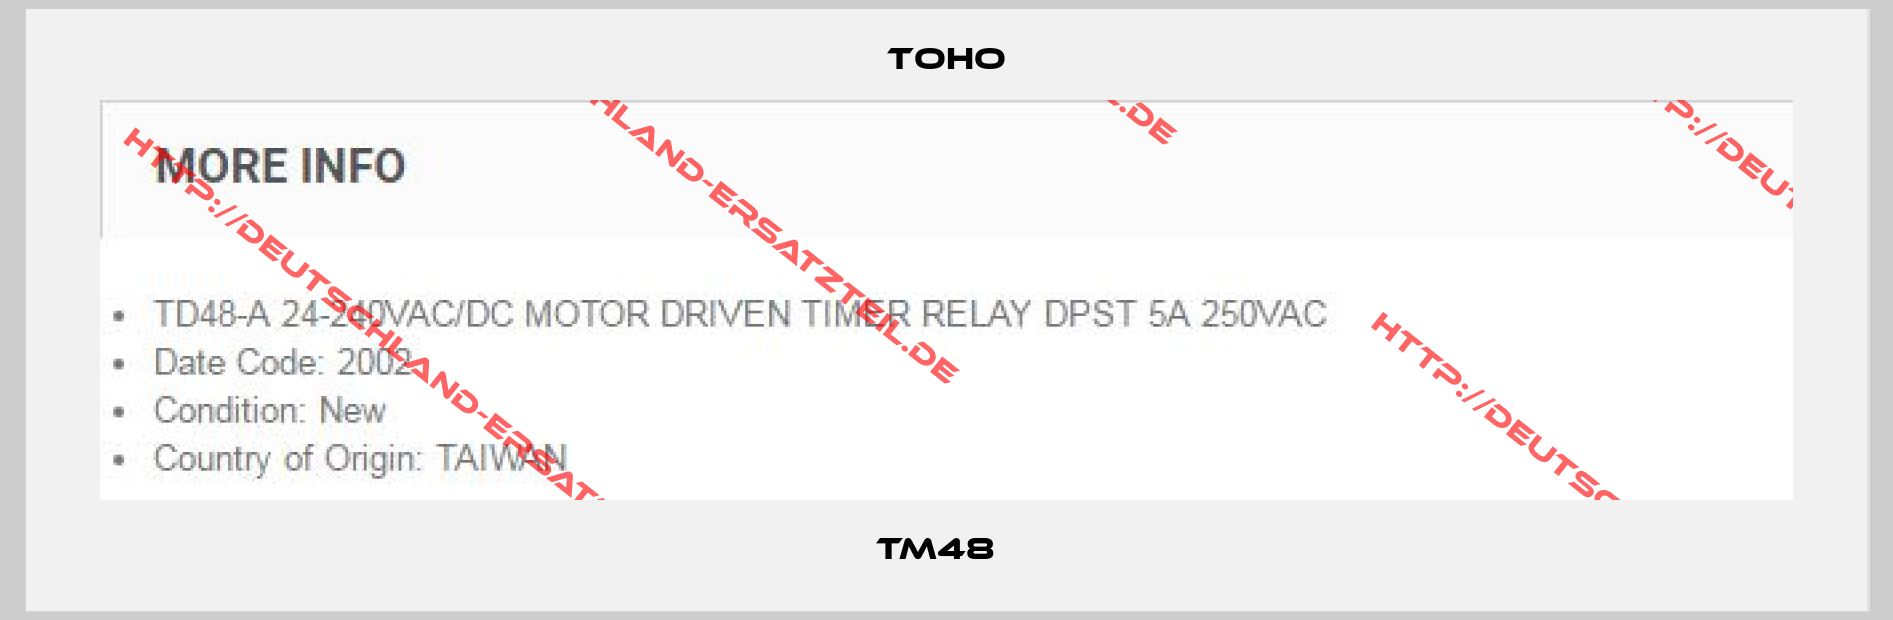 TOHO-TM48  